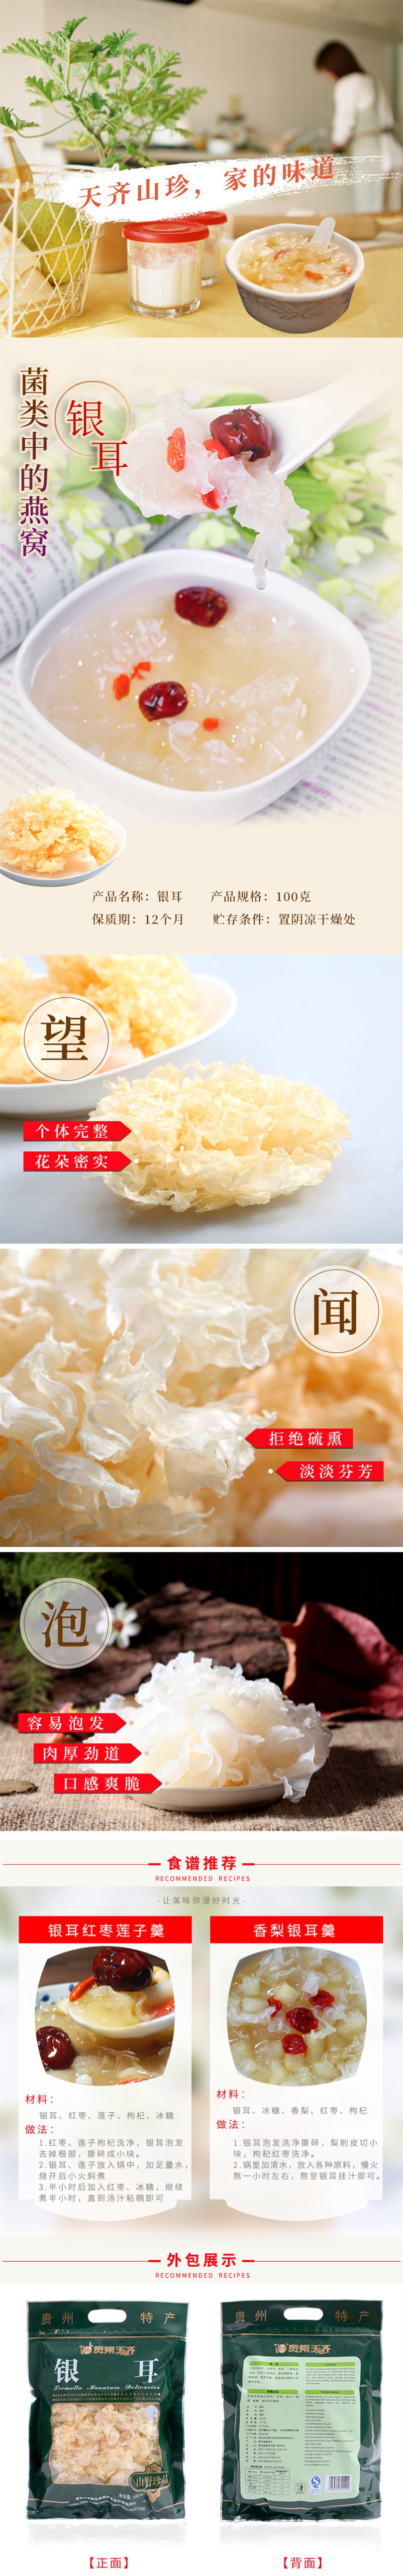 Guizhou specialty Fungus 100g